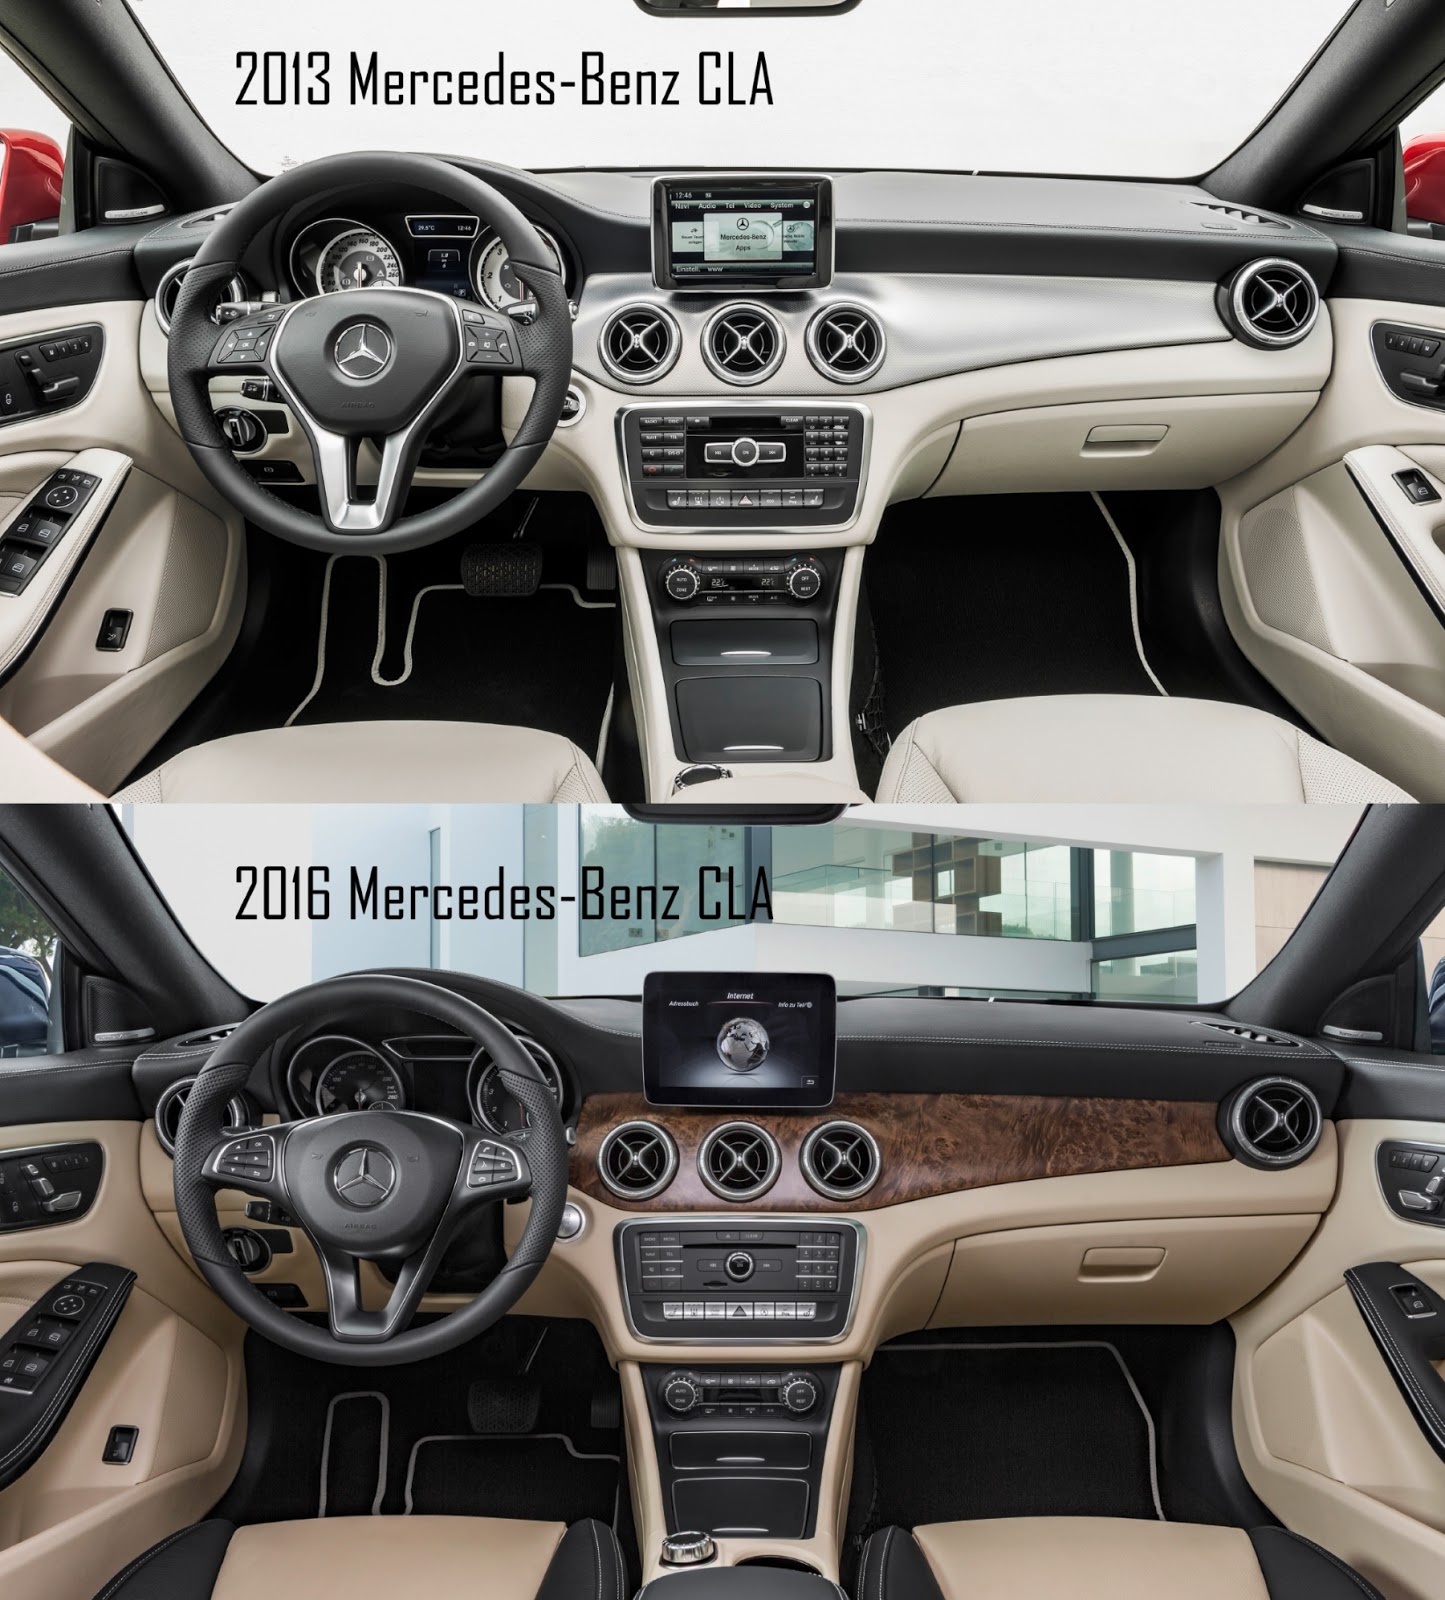 Vergleich 2013 Vs 2016 Mercedes Benz Cla Autofilou